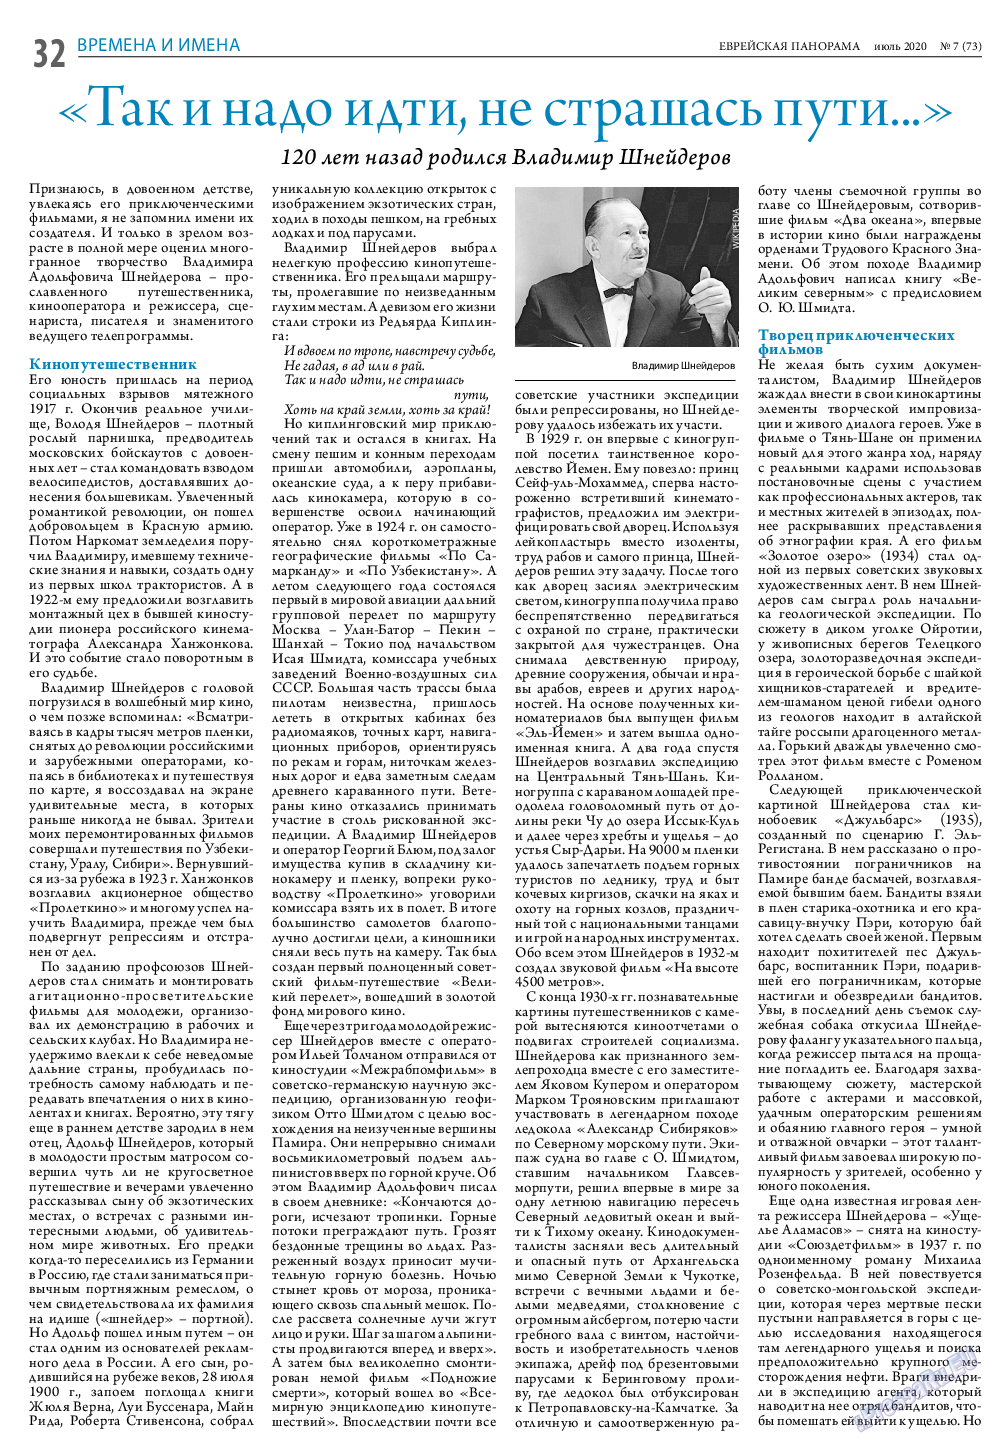 Еврейская панорама, газета. 2020 №7 стр.32